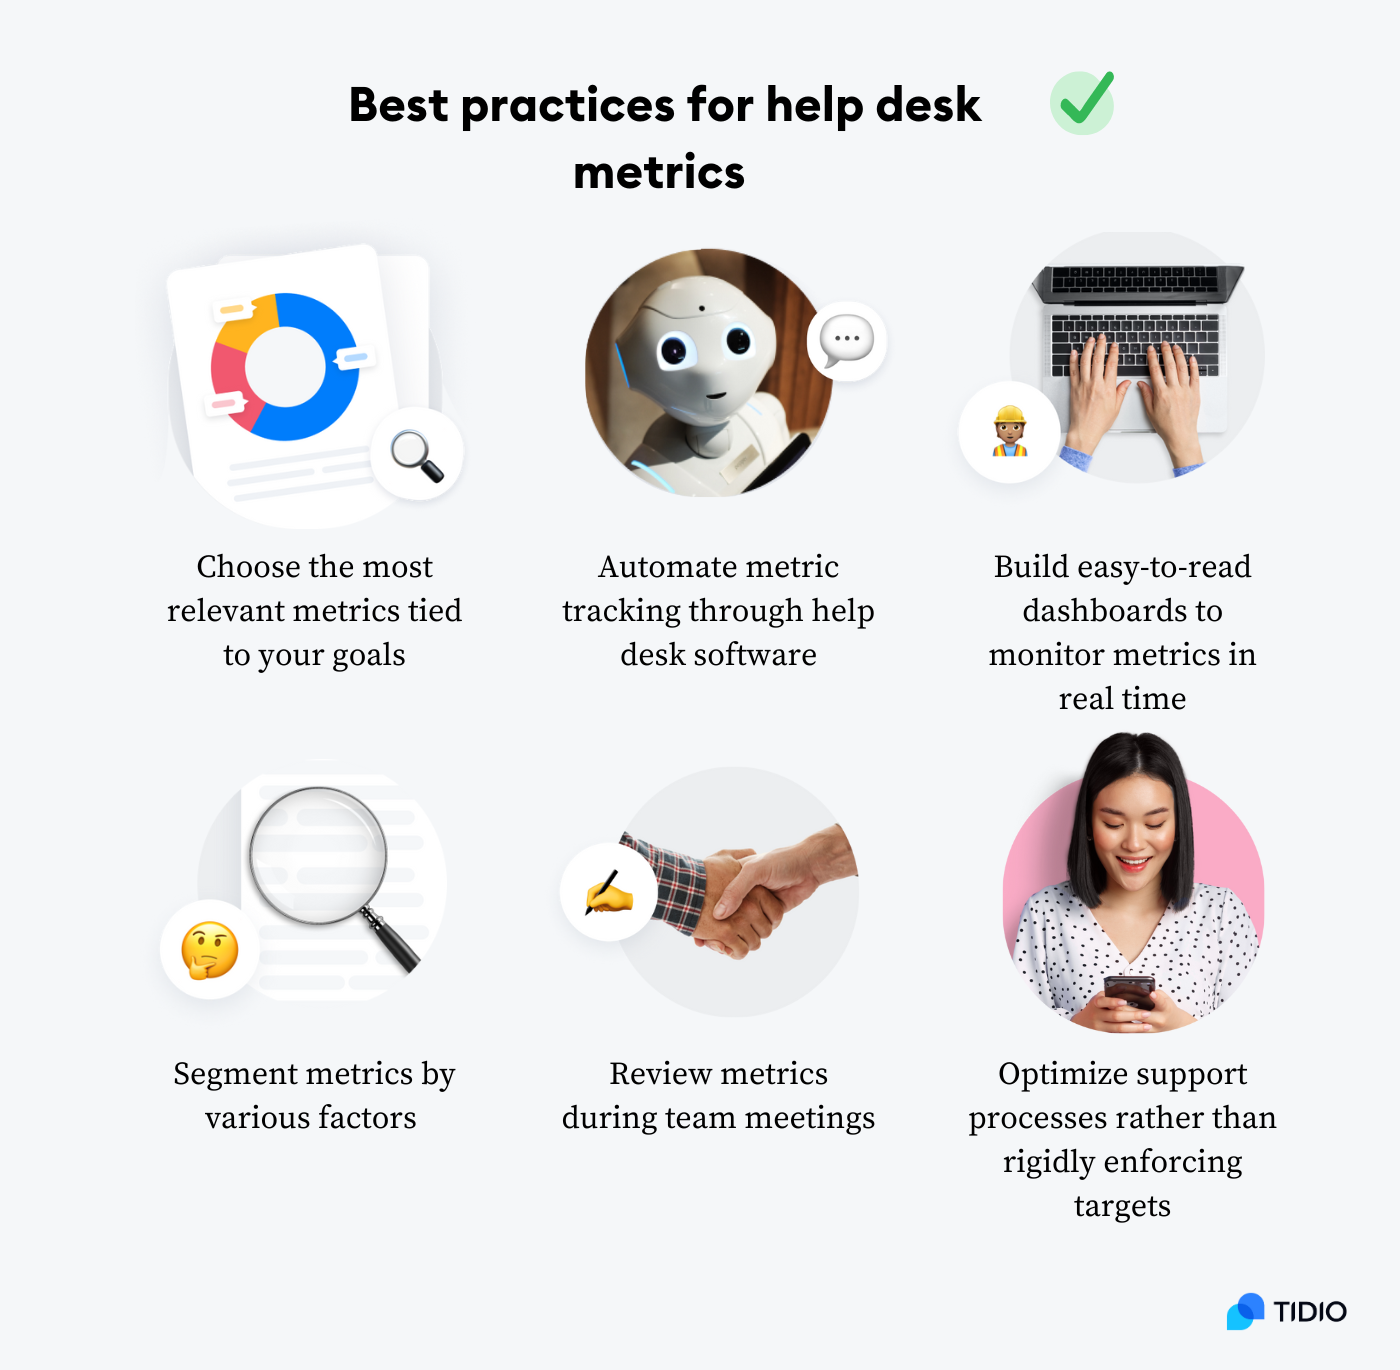 Help-desk-metrics:-best-practices-on-image